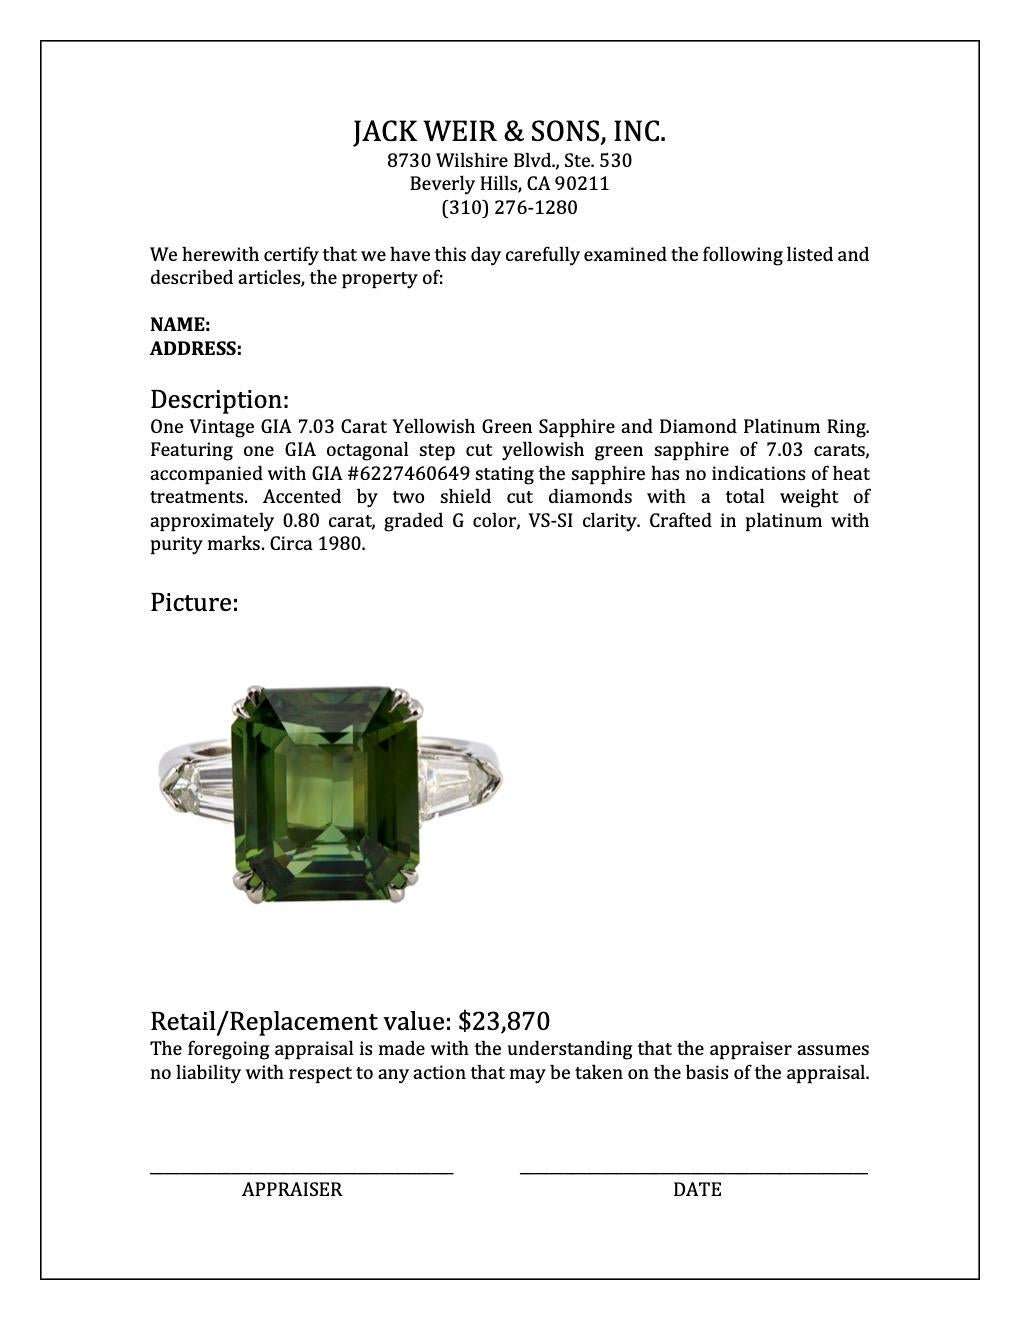 Vintage GIA 7.03 Carat Yellowish Green Sapphire and Diamond Platinum Ring 2